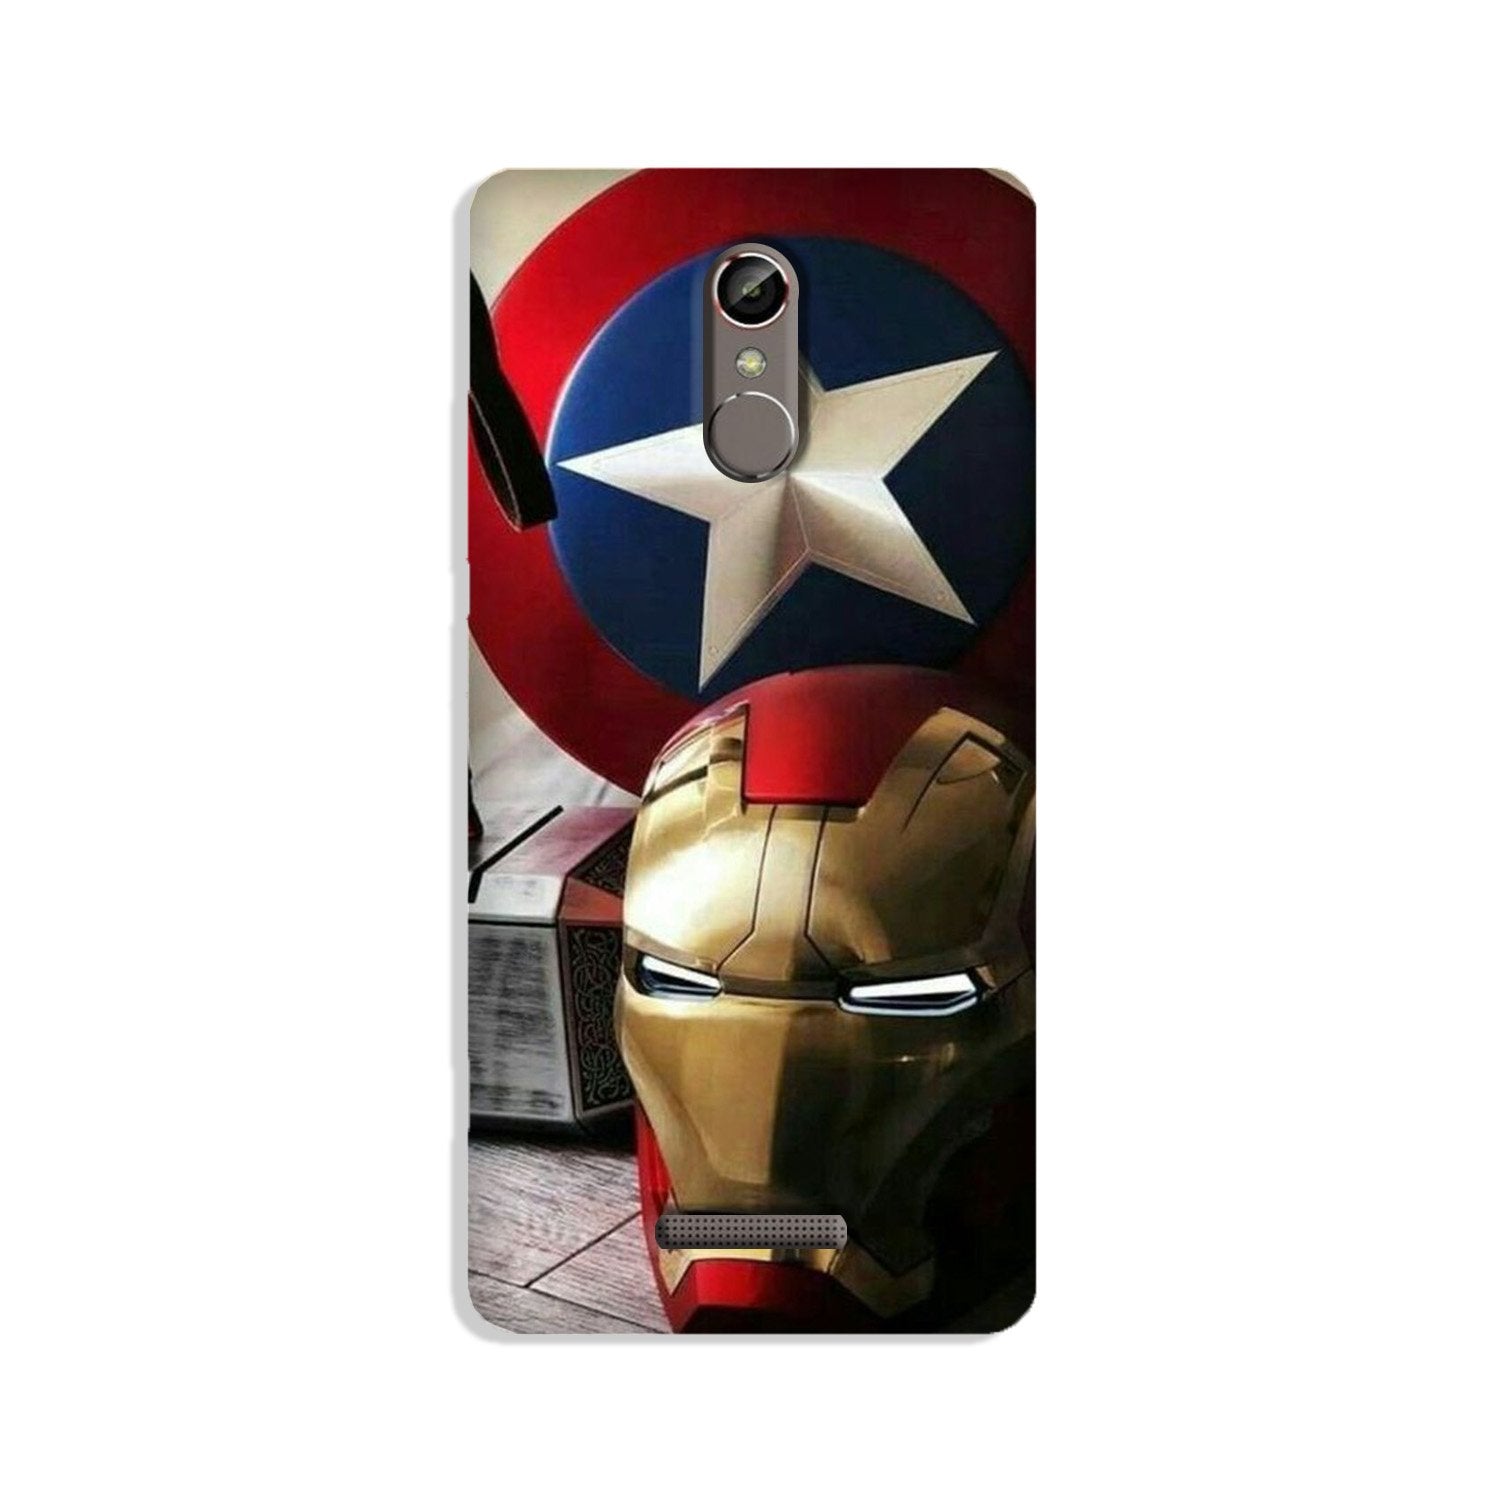 Ironman Captain America Case for Gionee S6s (Design No. 254)